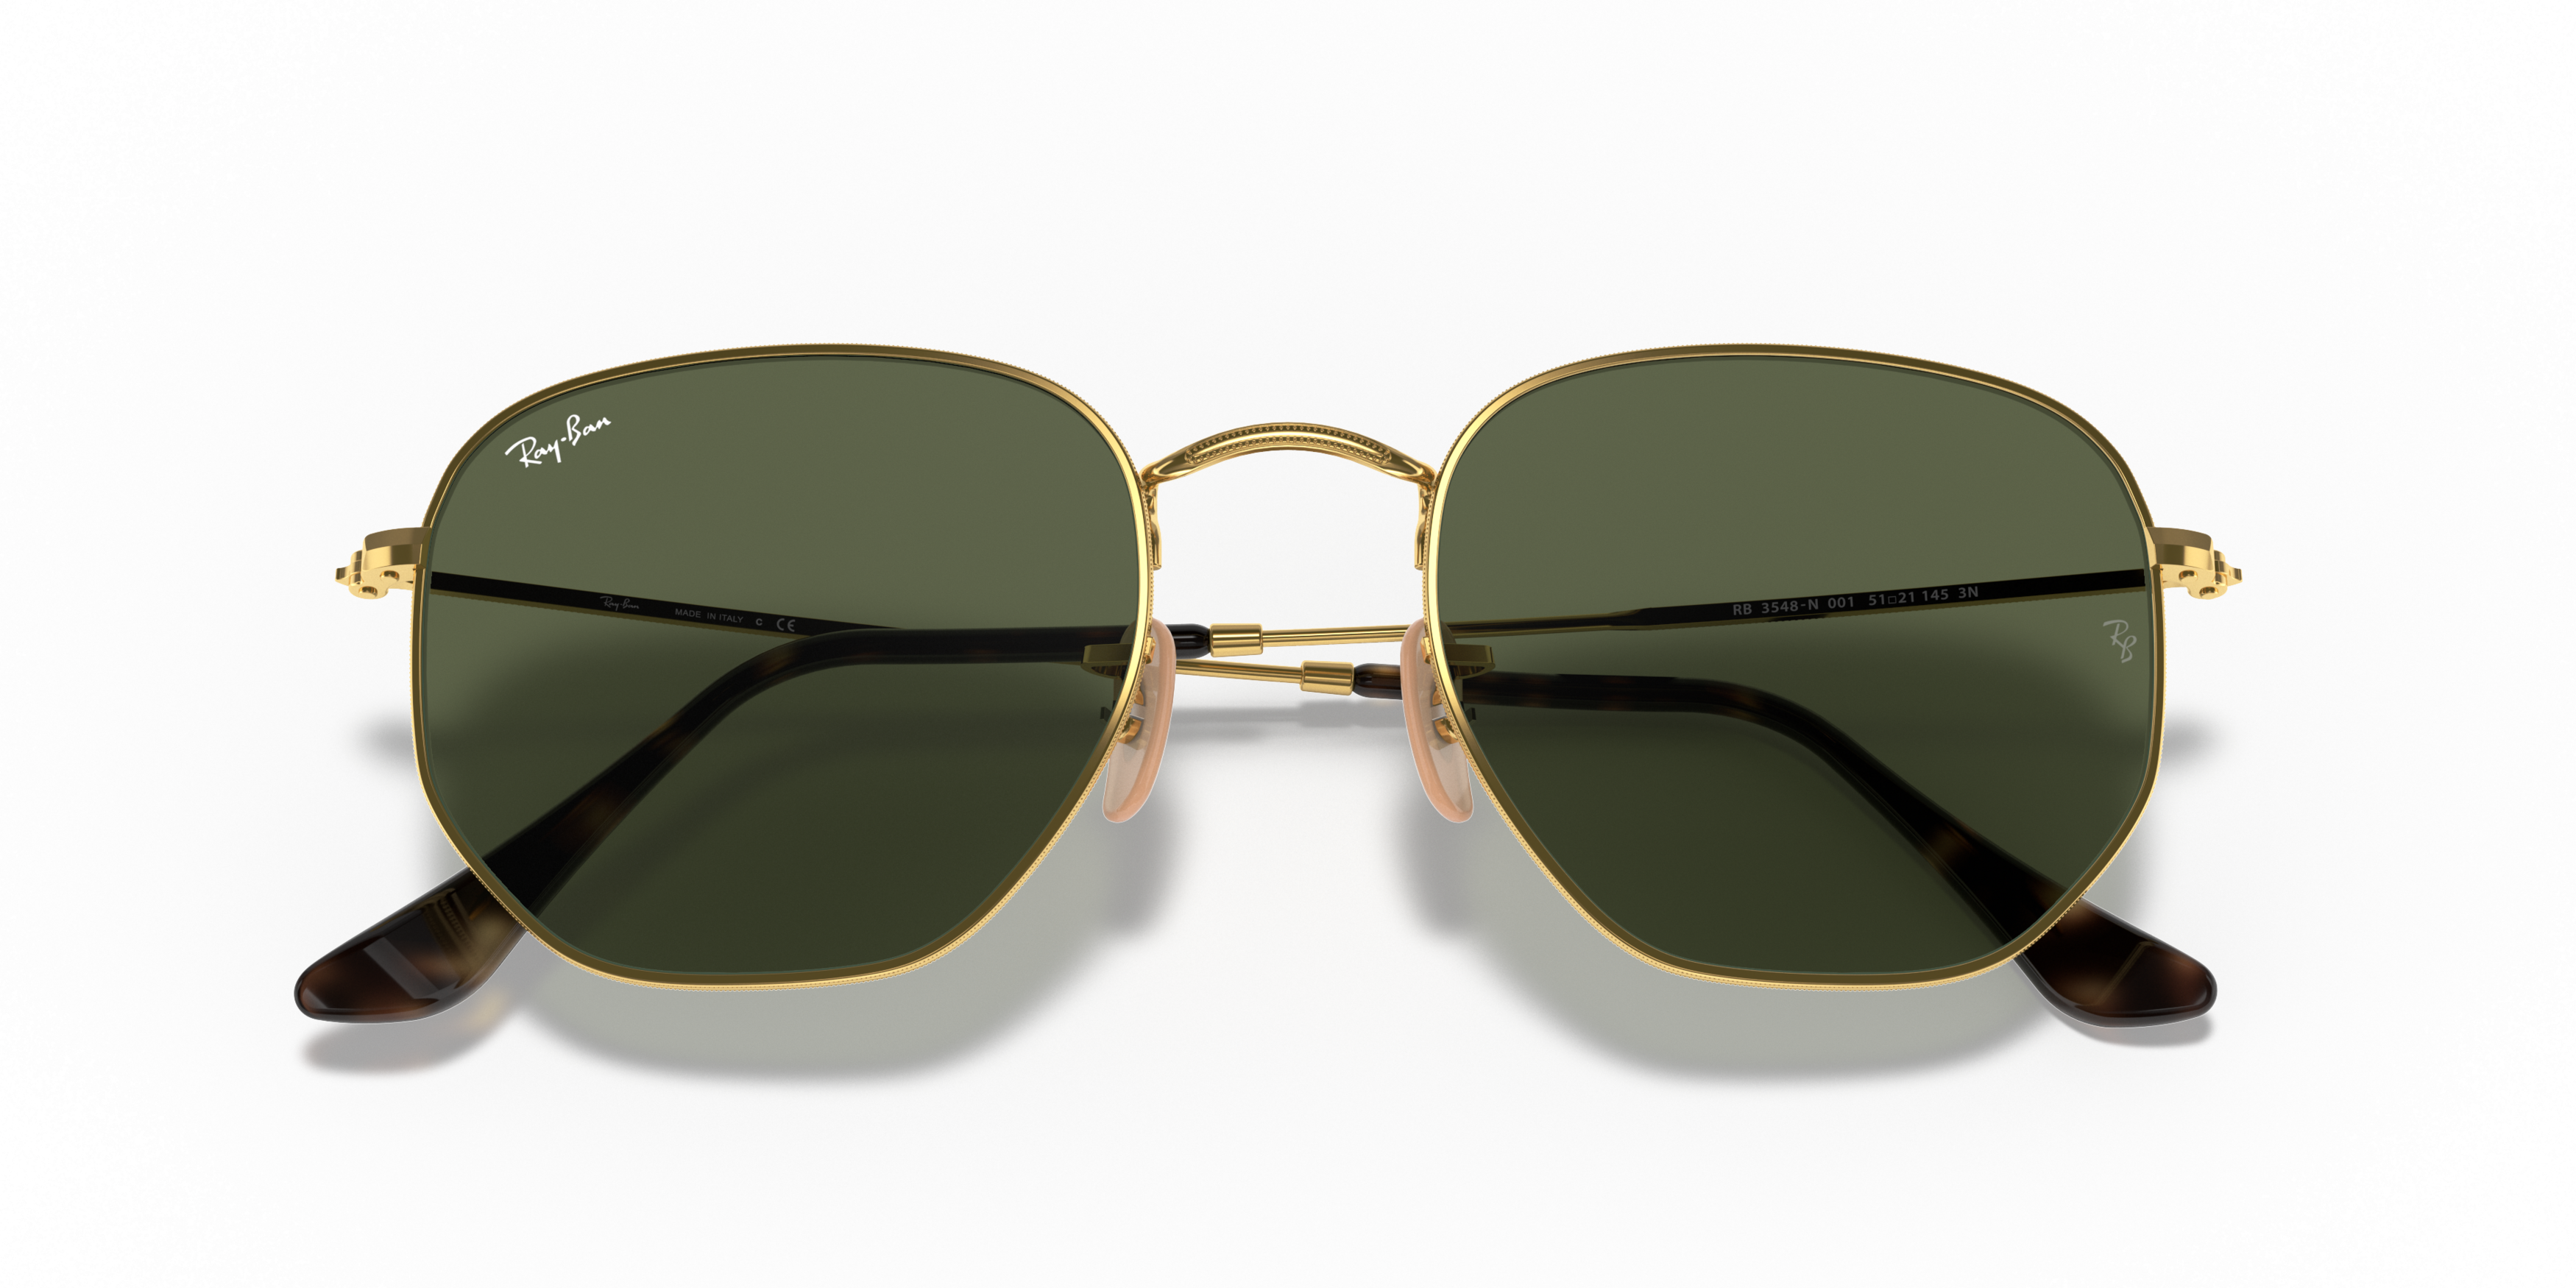 Folded Ray-Ban Hexagonal RB 3548N (001) Sunglasses Green / Gold